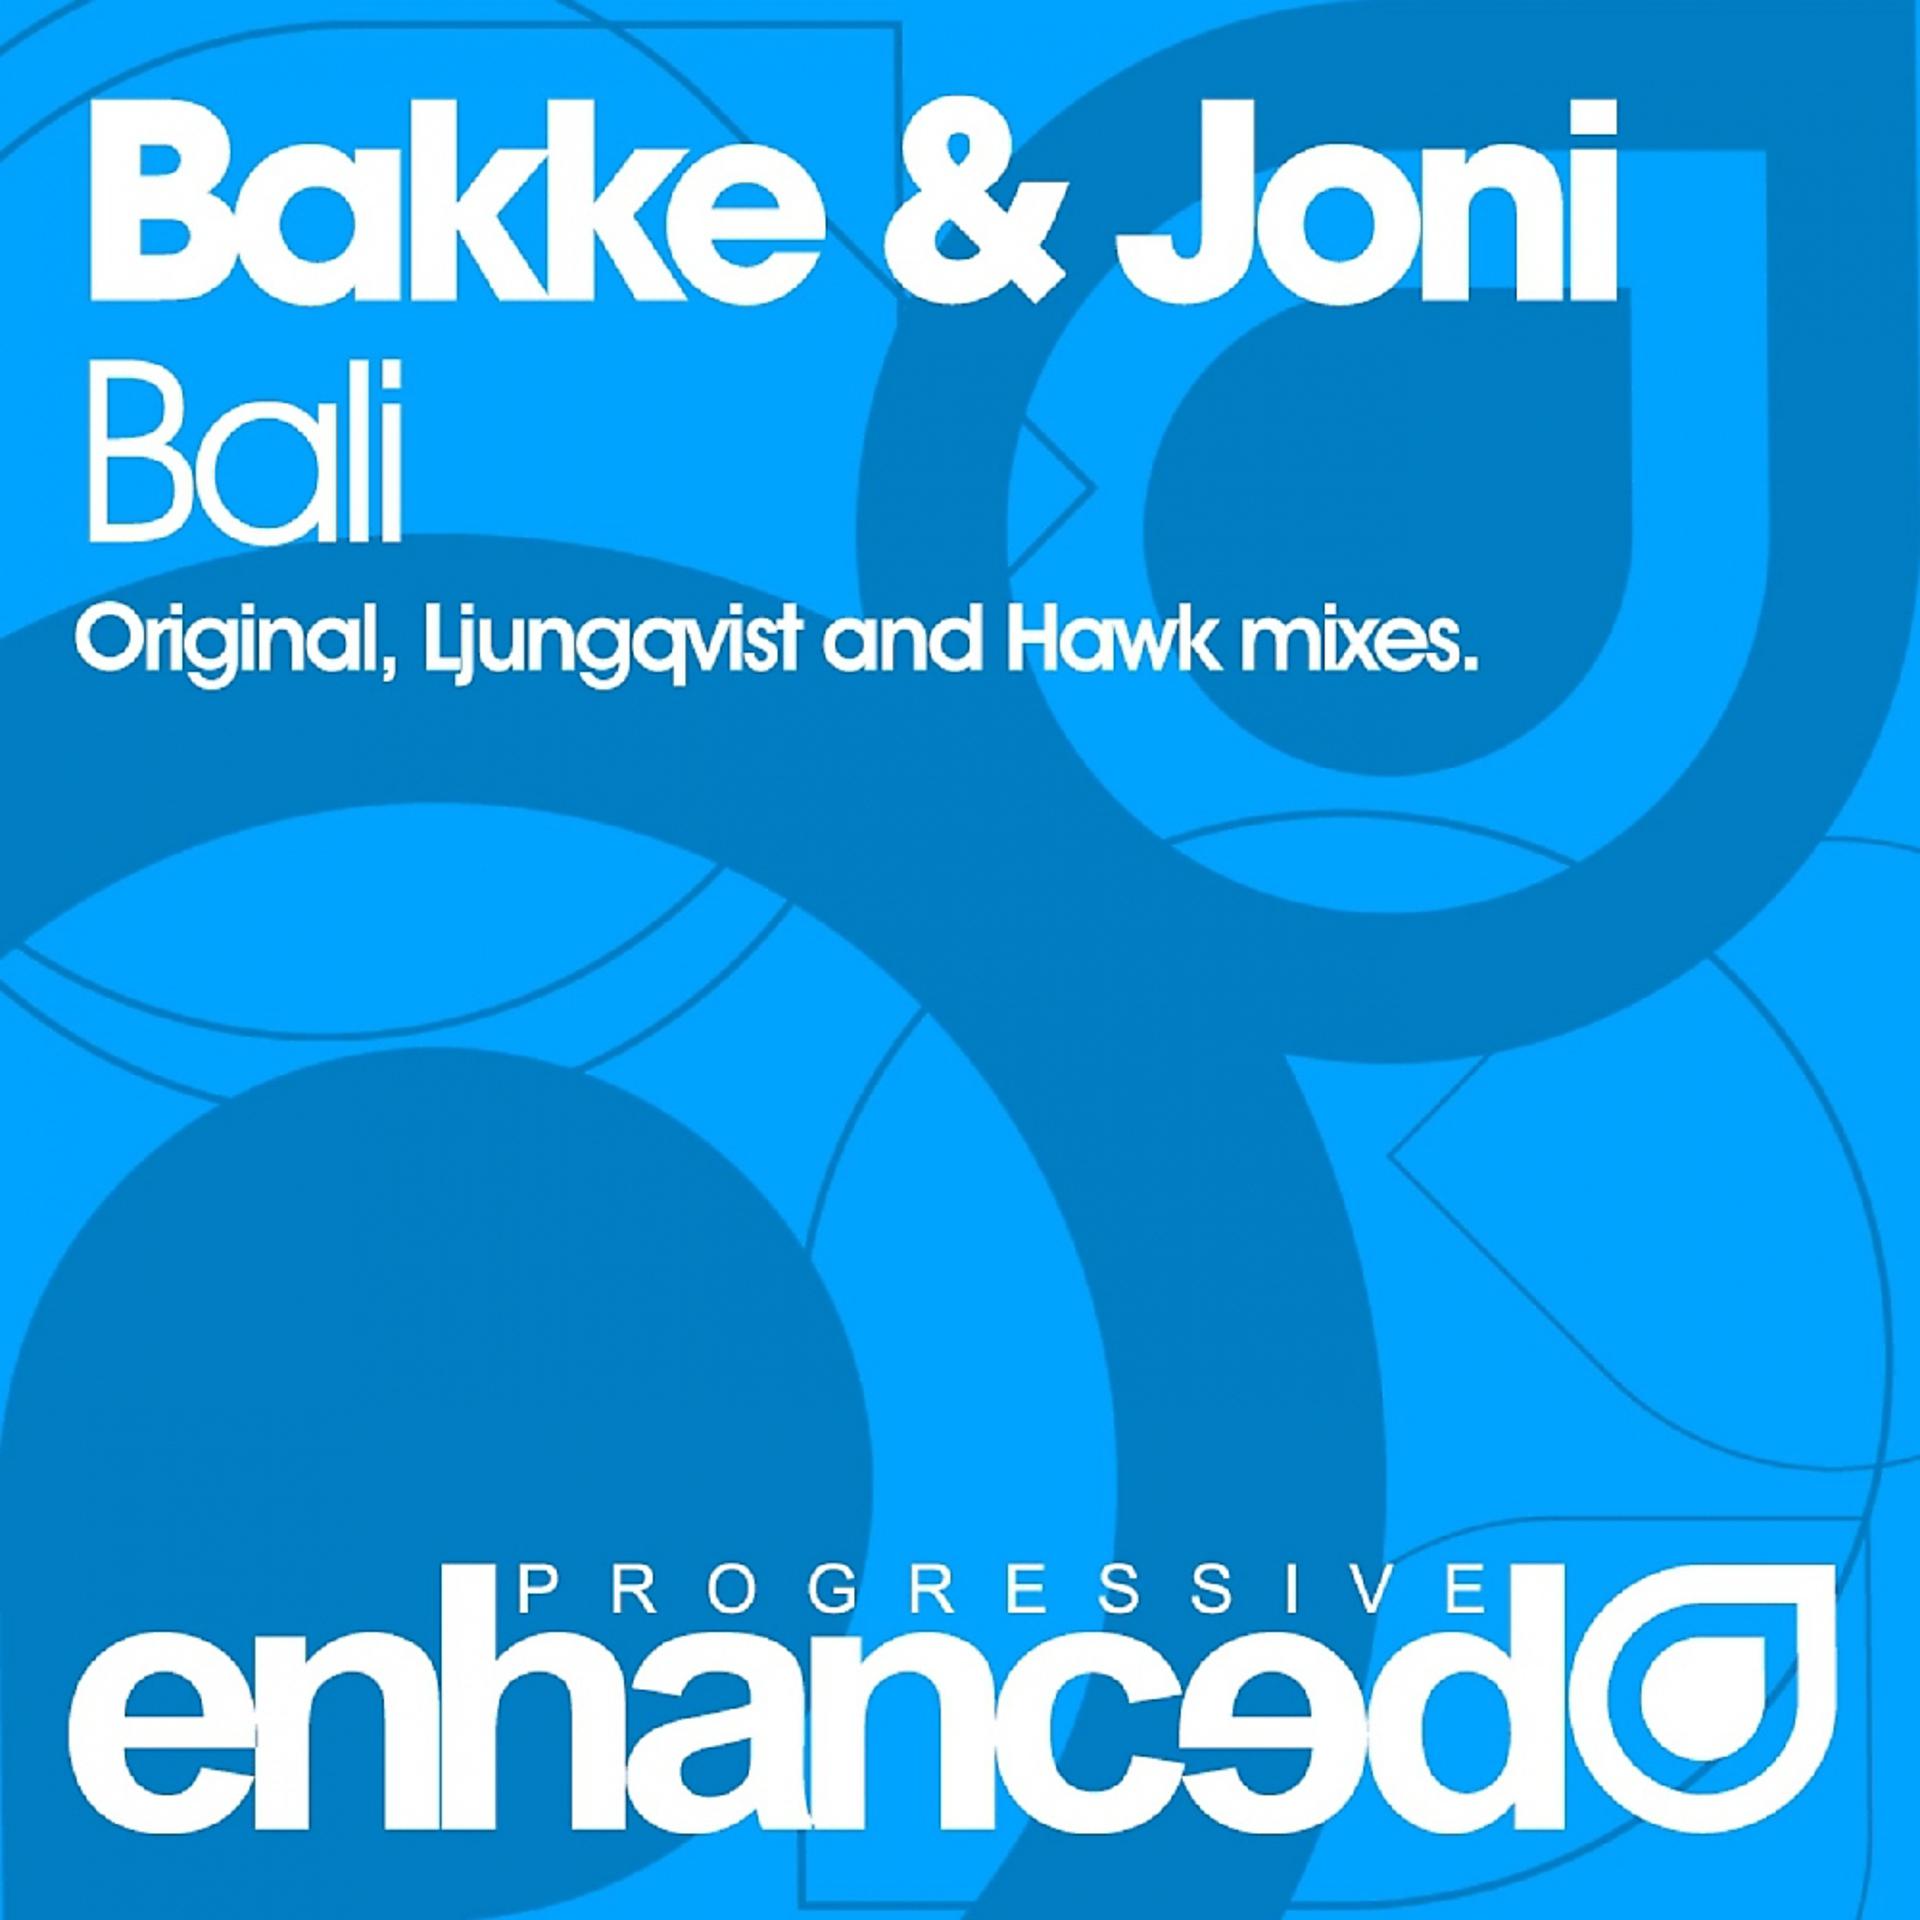 Постер альбома Bali